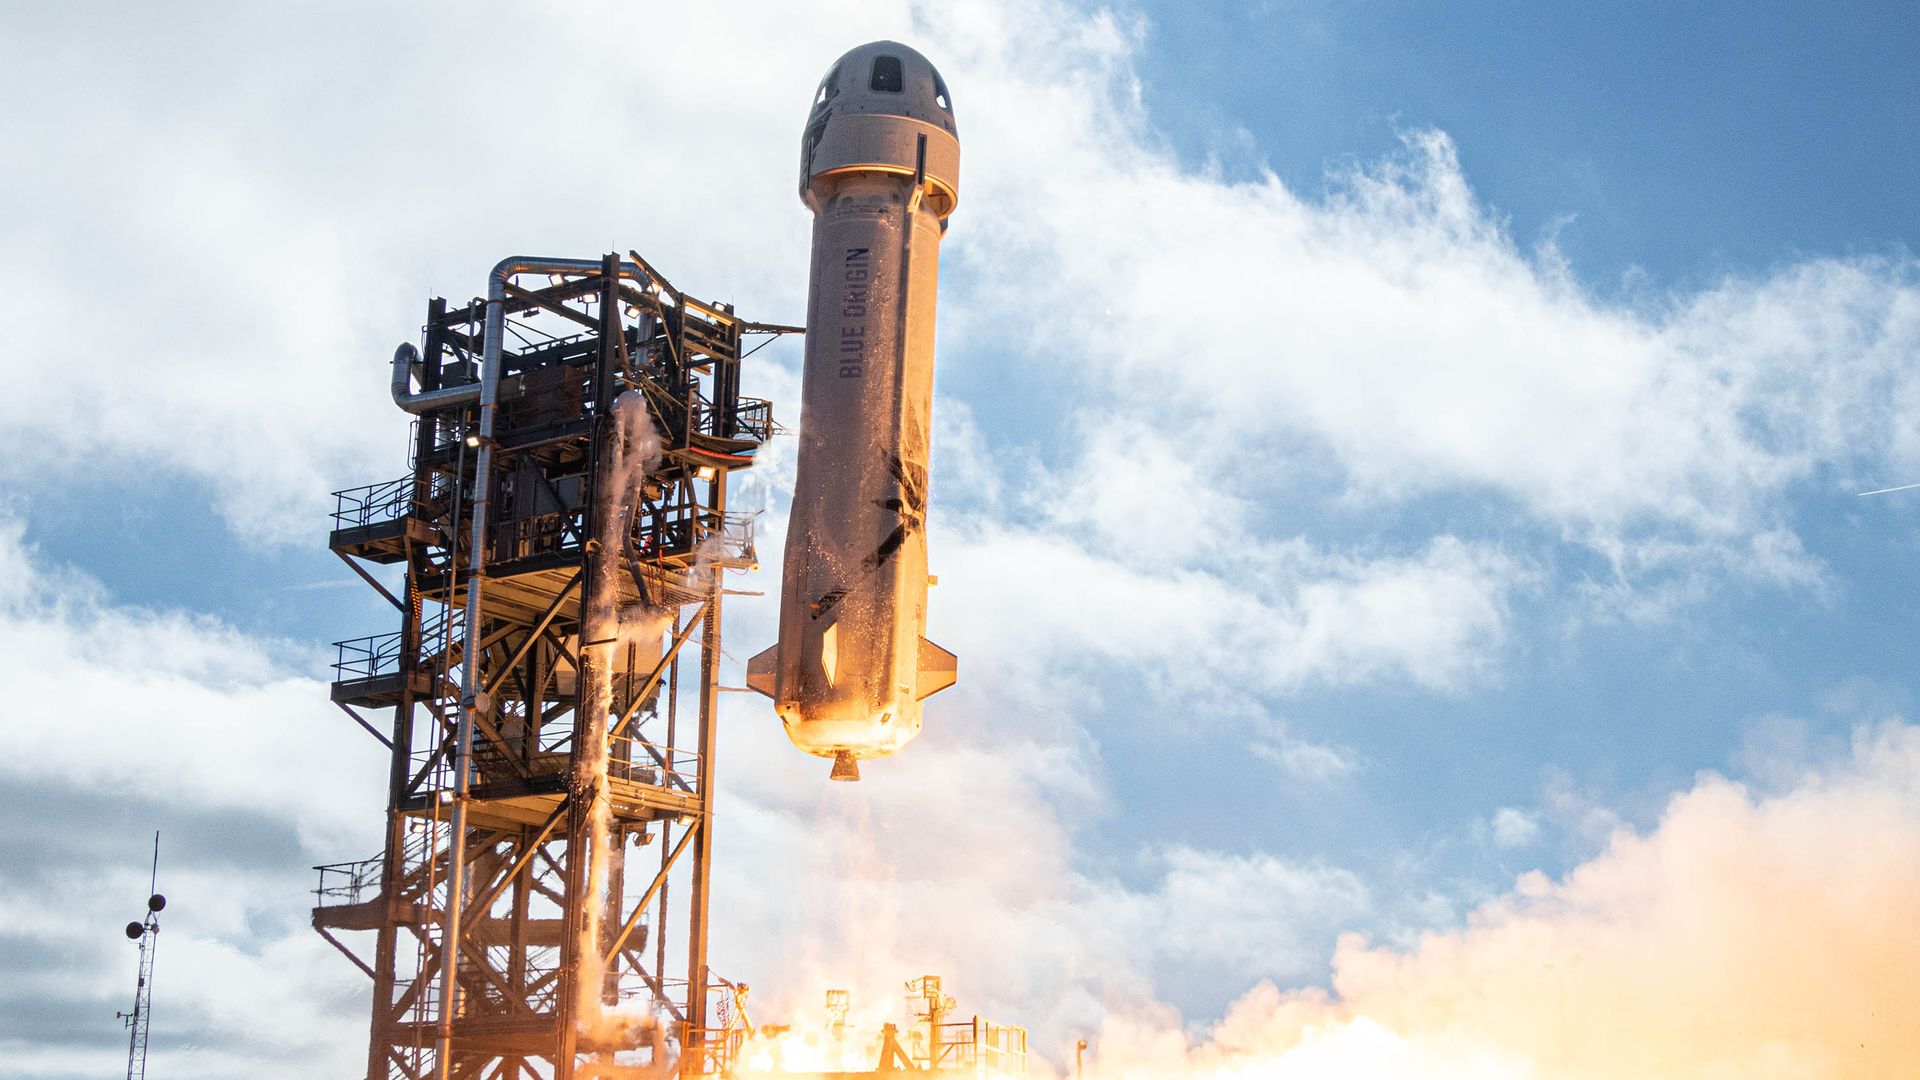 A Blue Origin rocket taking flight from Texas